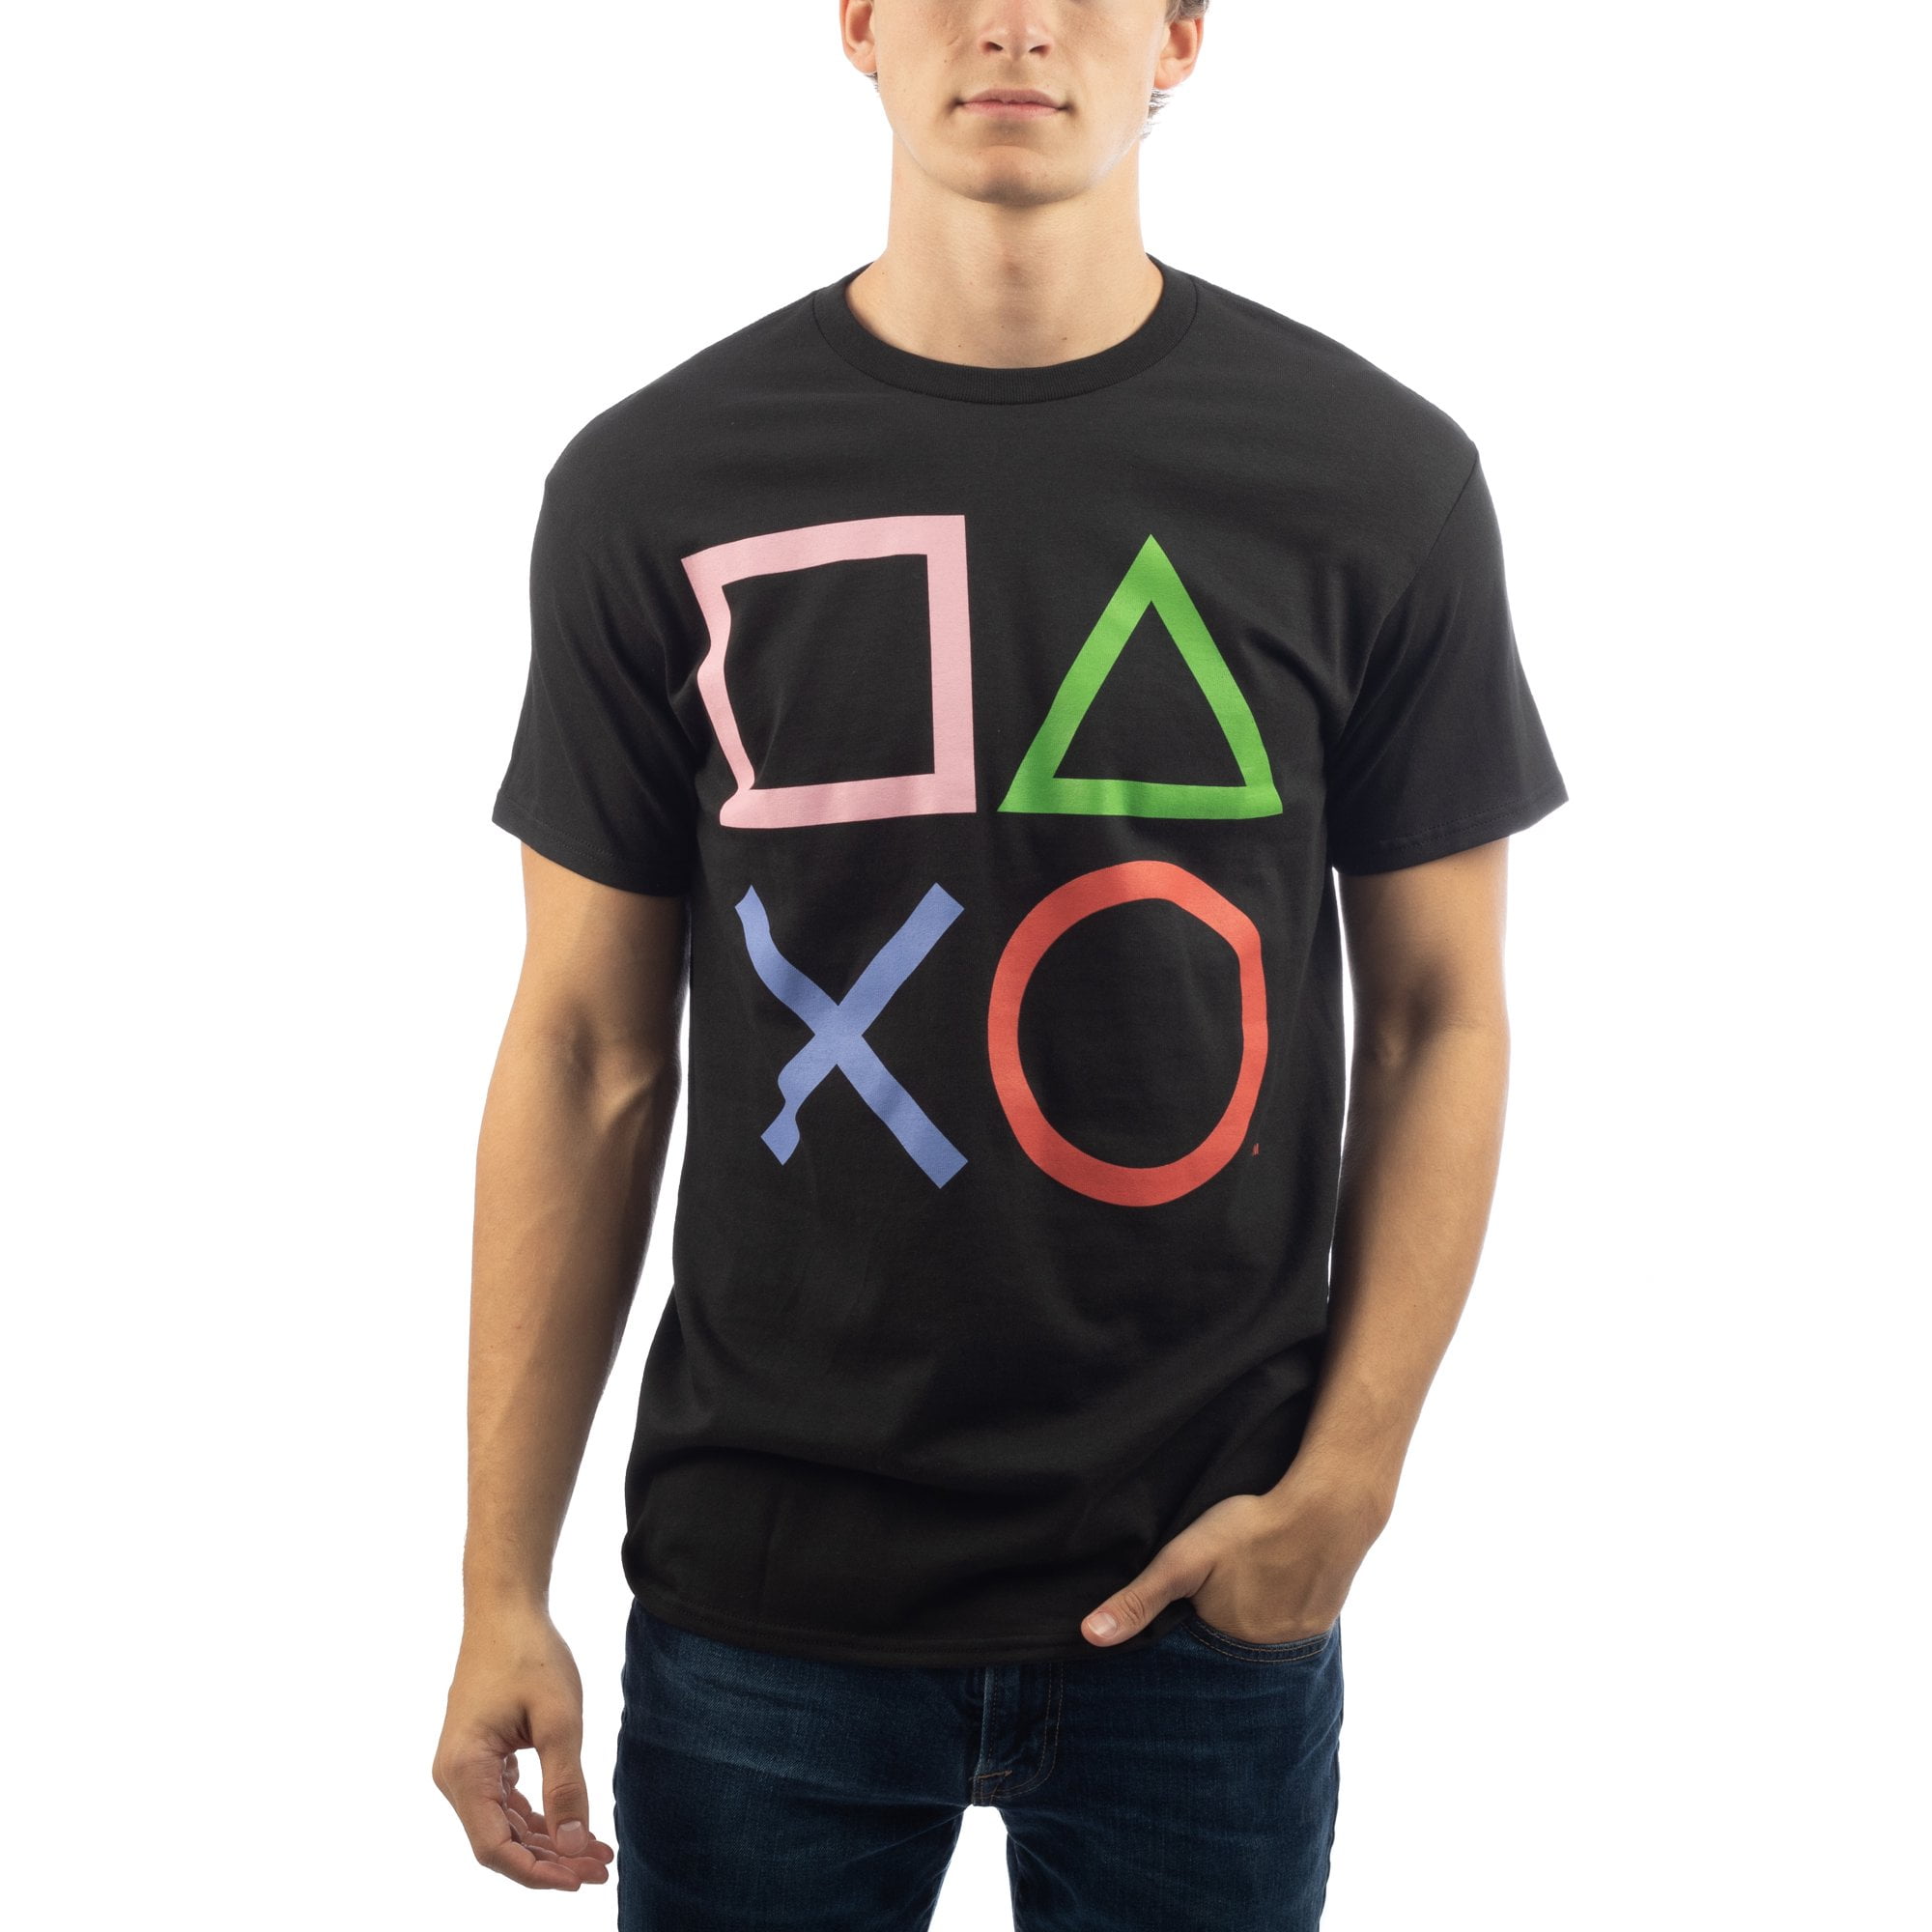 Sony Playstation Tech19 T Shirt Mens